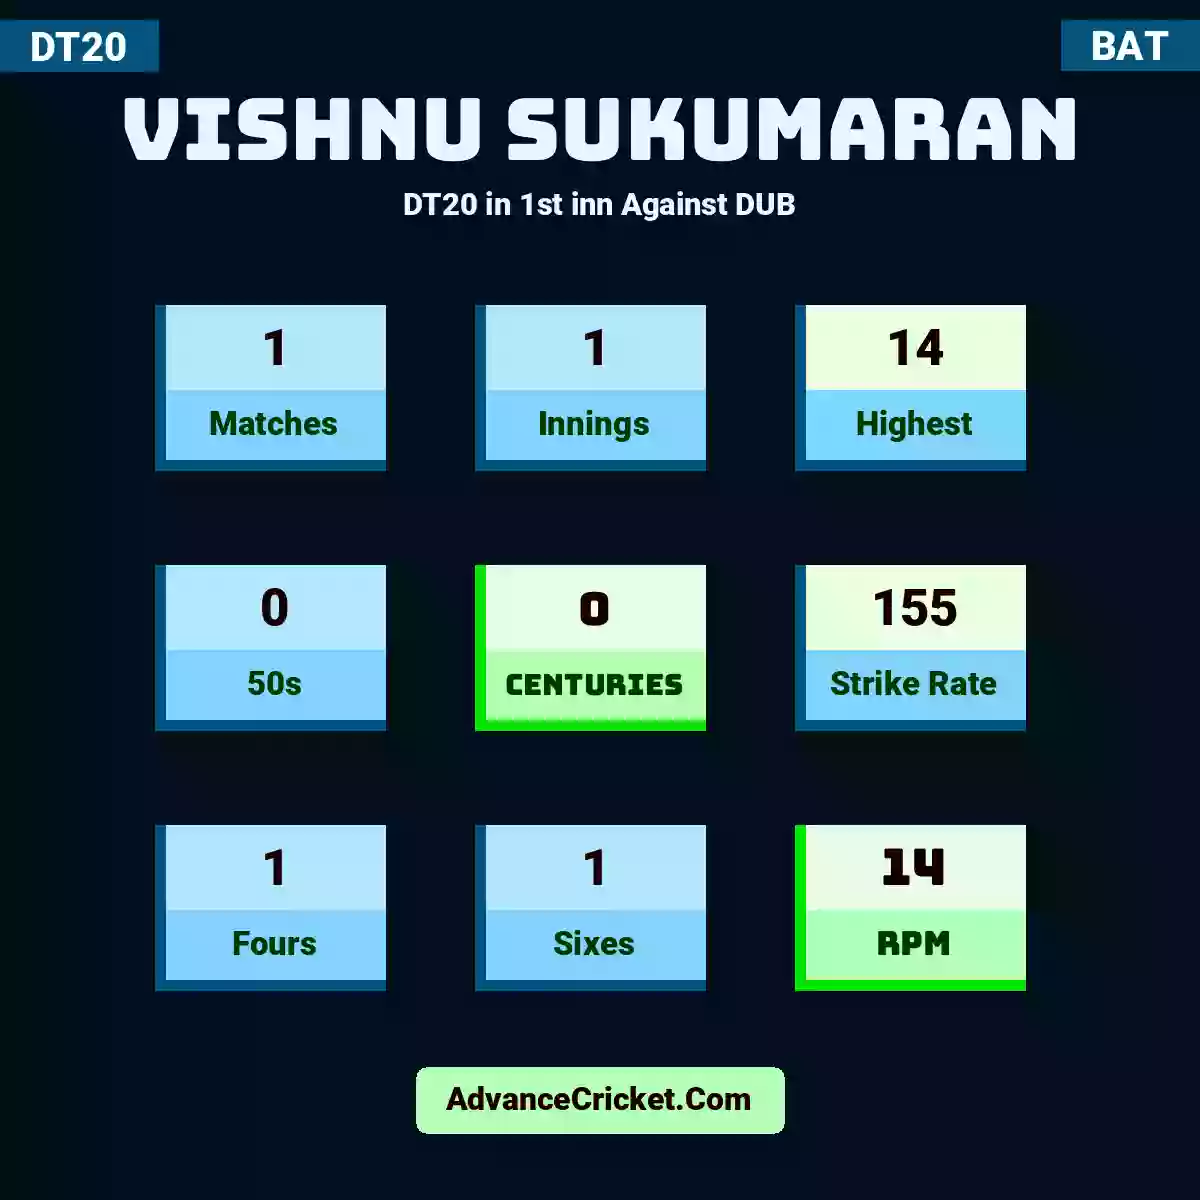 Vishnu Sukumaran DT20  in 1st inn Against DUB, Vishnu Sukumaran played 1 matches, scored 14 runs as highest, 0 half-centuries, and 0 centuries, with a strike rate of 155. V.Sukumaran hit 1 fours and 1 sixes, with an RPM of 14.